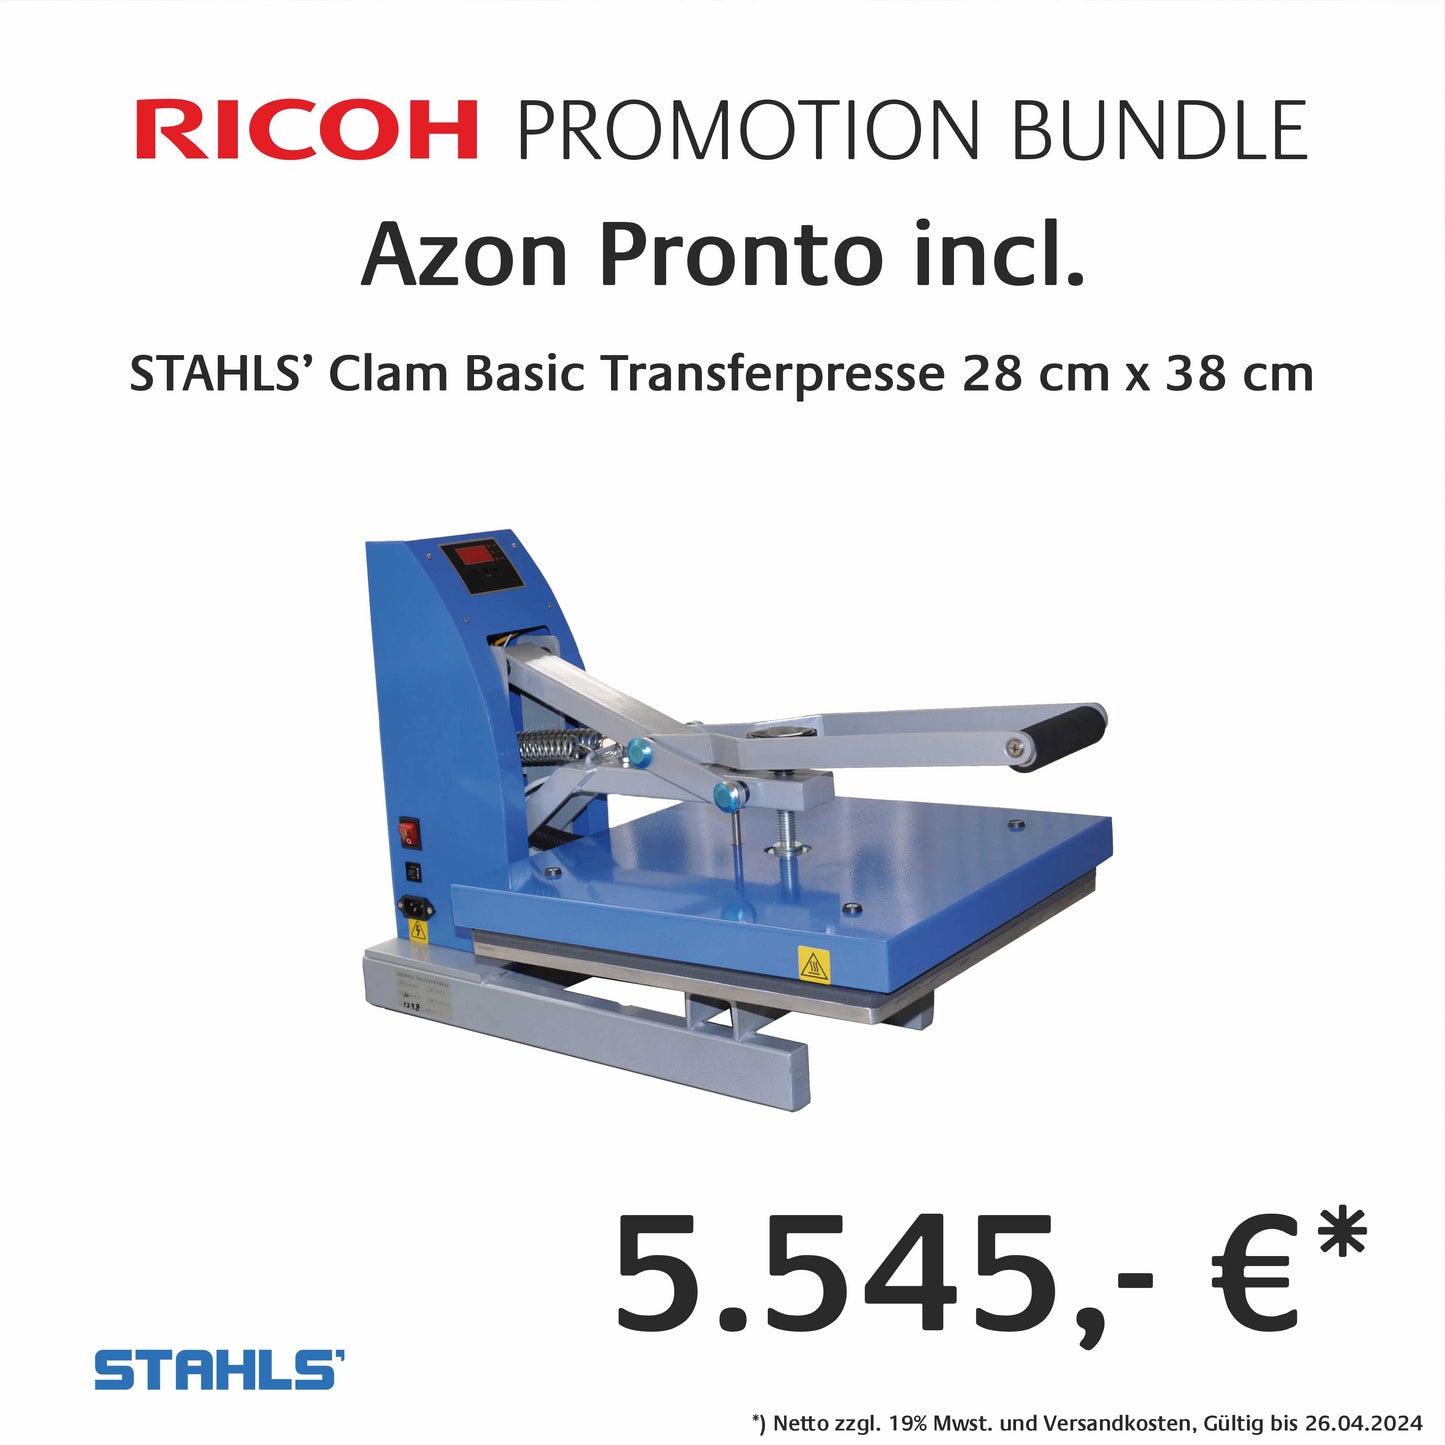 Azon Pronto - Desktop-DTF-Drucksystem - Ricoh-Promotion Bundle mit STAHLS’ Clam Basic Transferpresse 28 x 38 cm